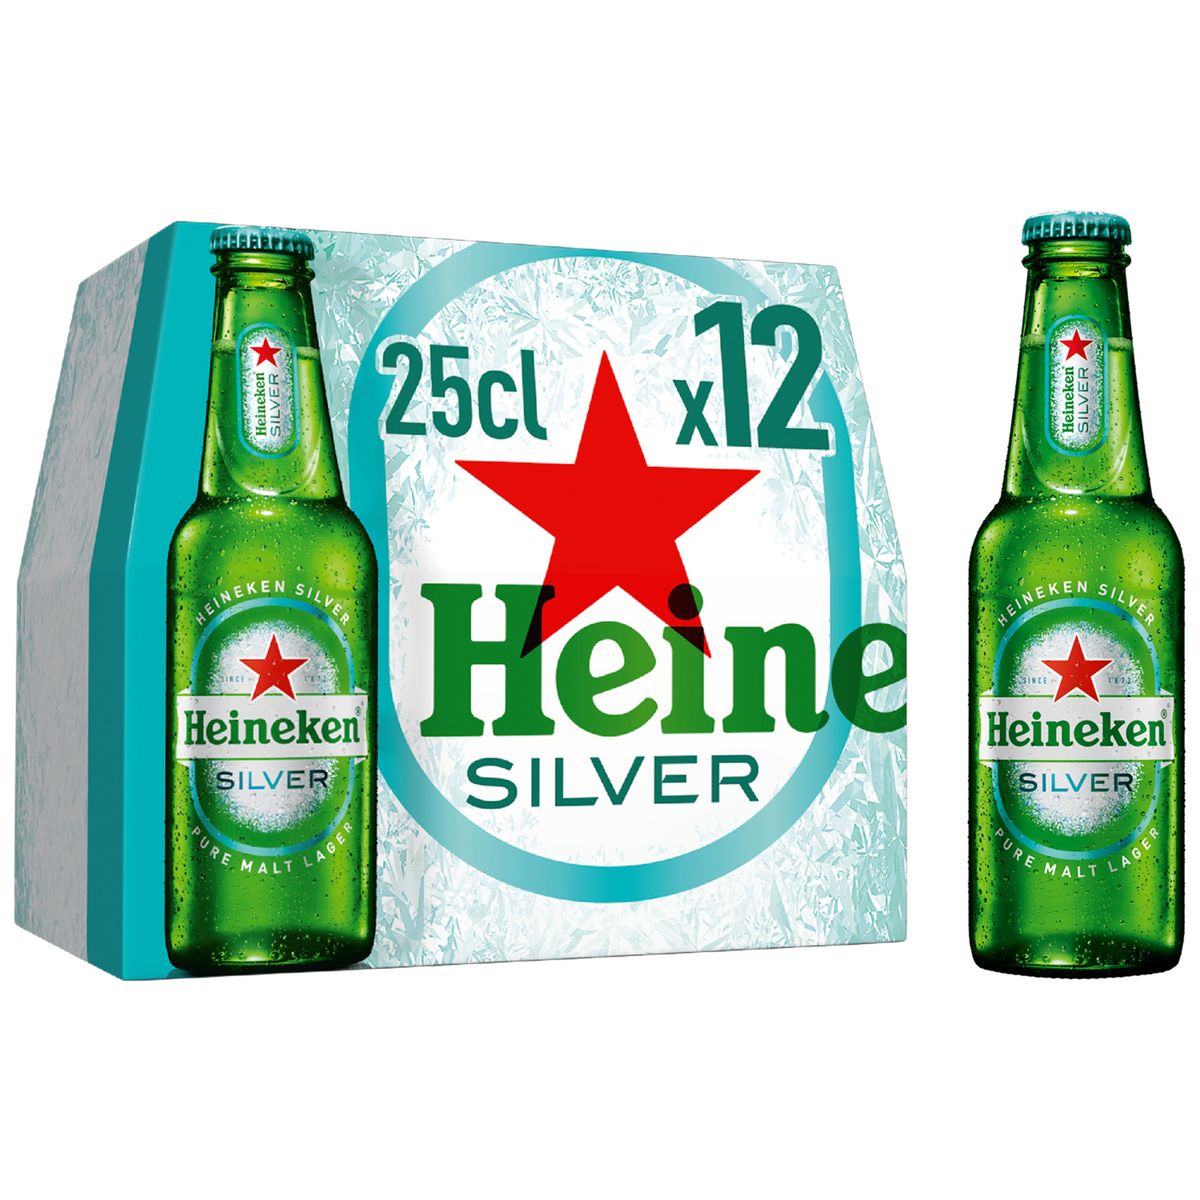 HEINEKEN Bière blonde silver 4% bouteilles 12x25cl